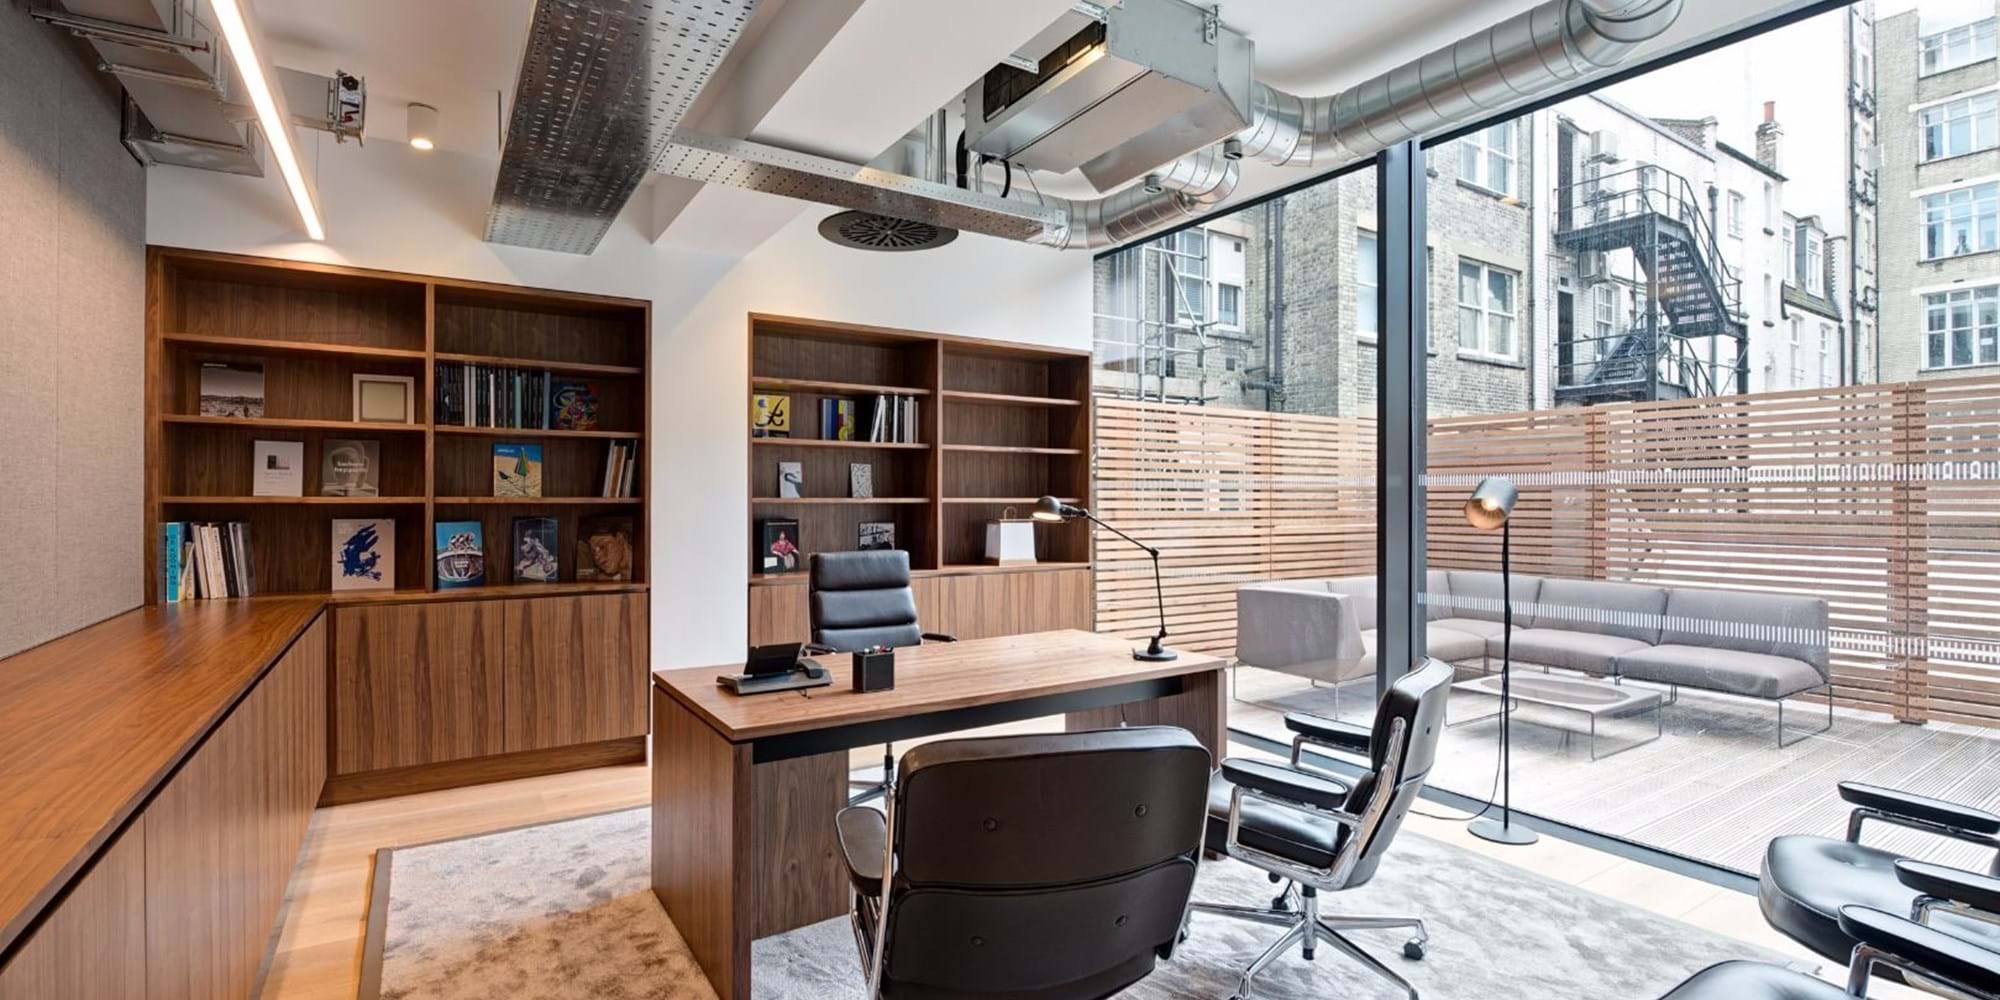 Modus Workspace office design, fit out and refurbishment - Craigewan - Graigewan 07 highres sRGB.jpg